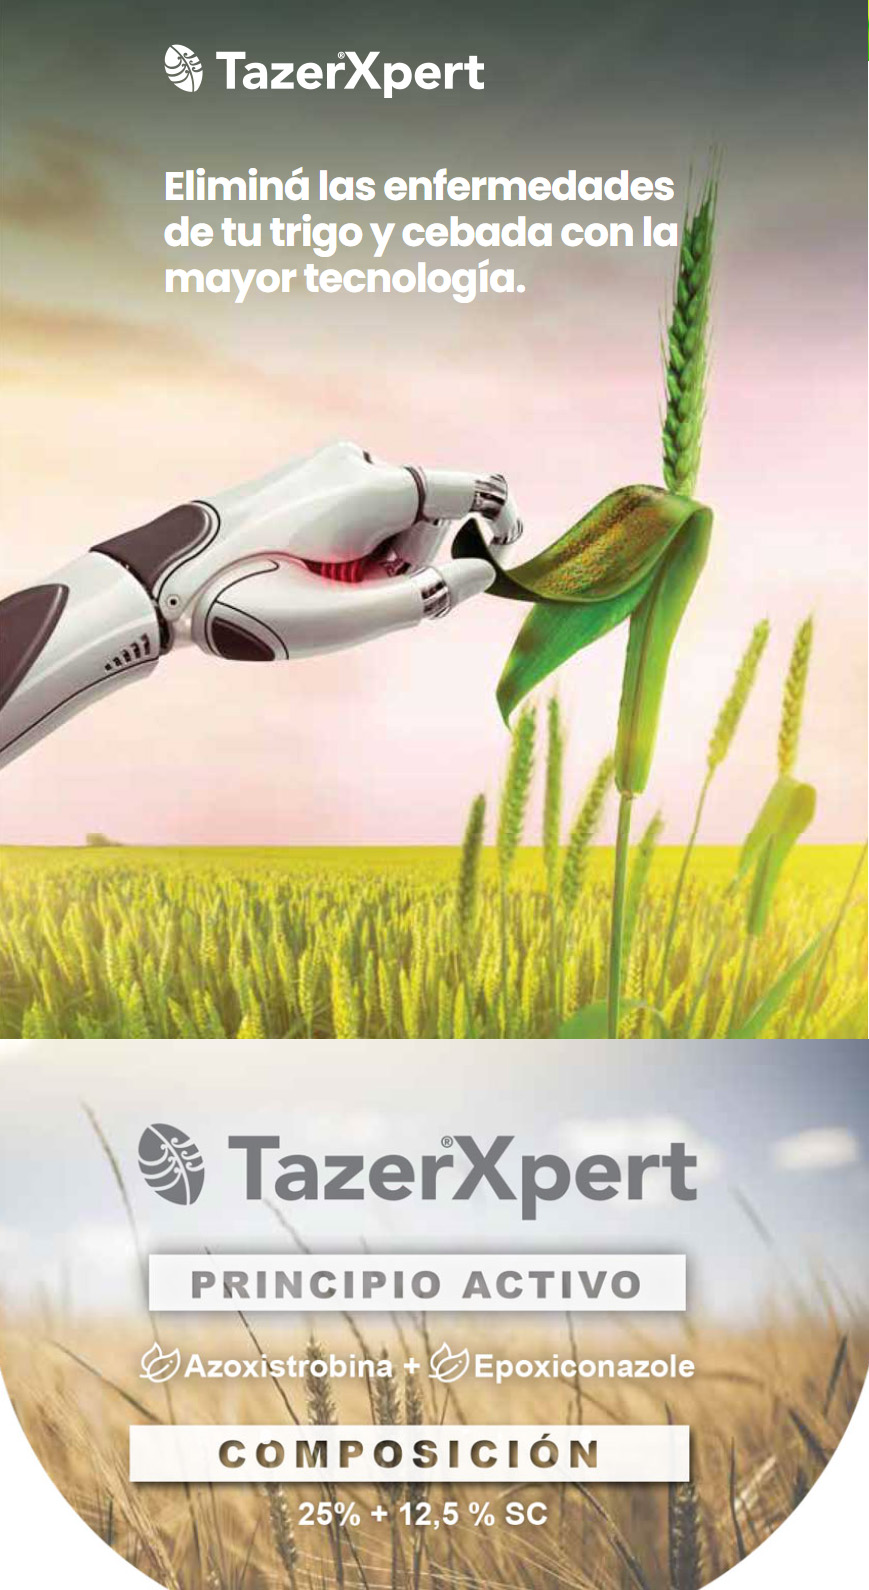 TazerXpert